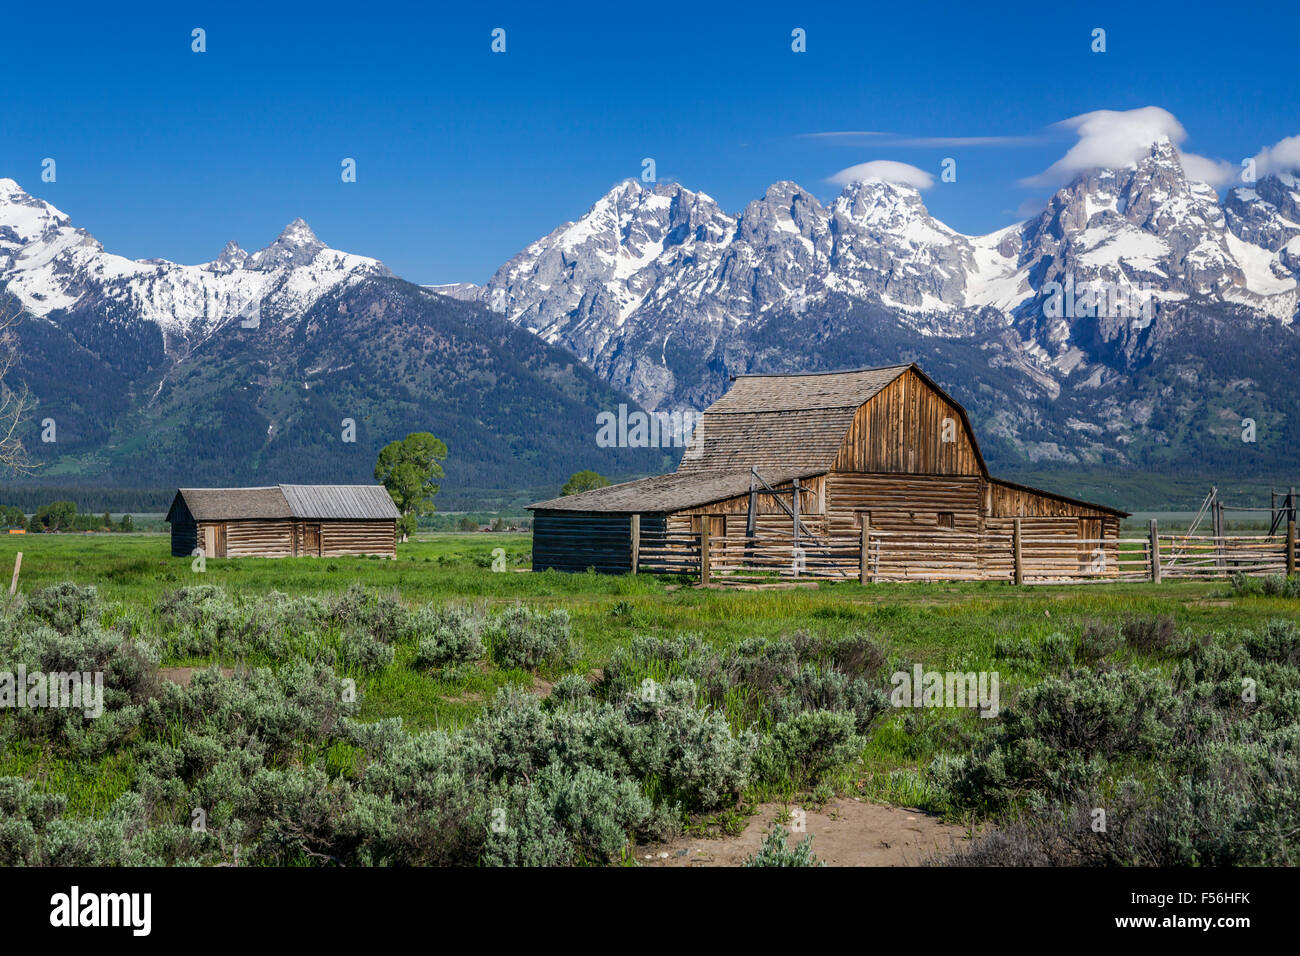 A barn at Mormon Row in the Grand Teton National Park, Wyoming, USA. Stock Photo